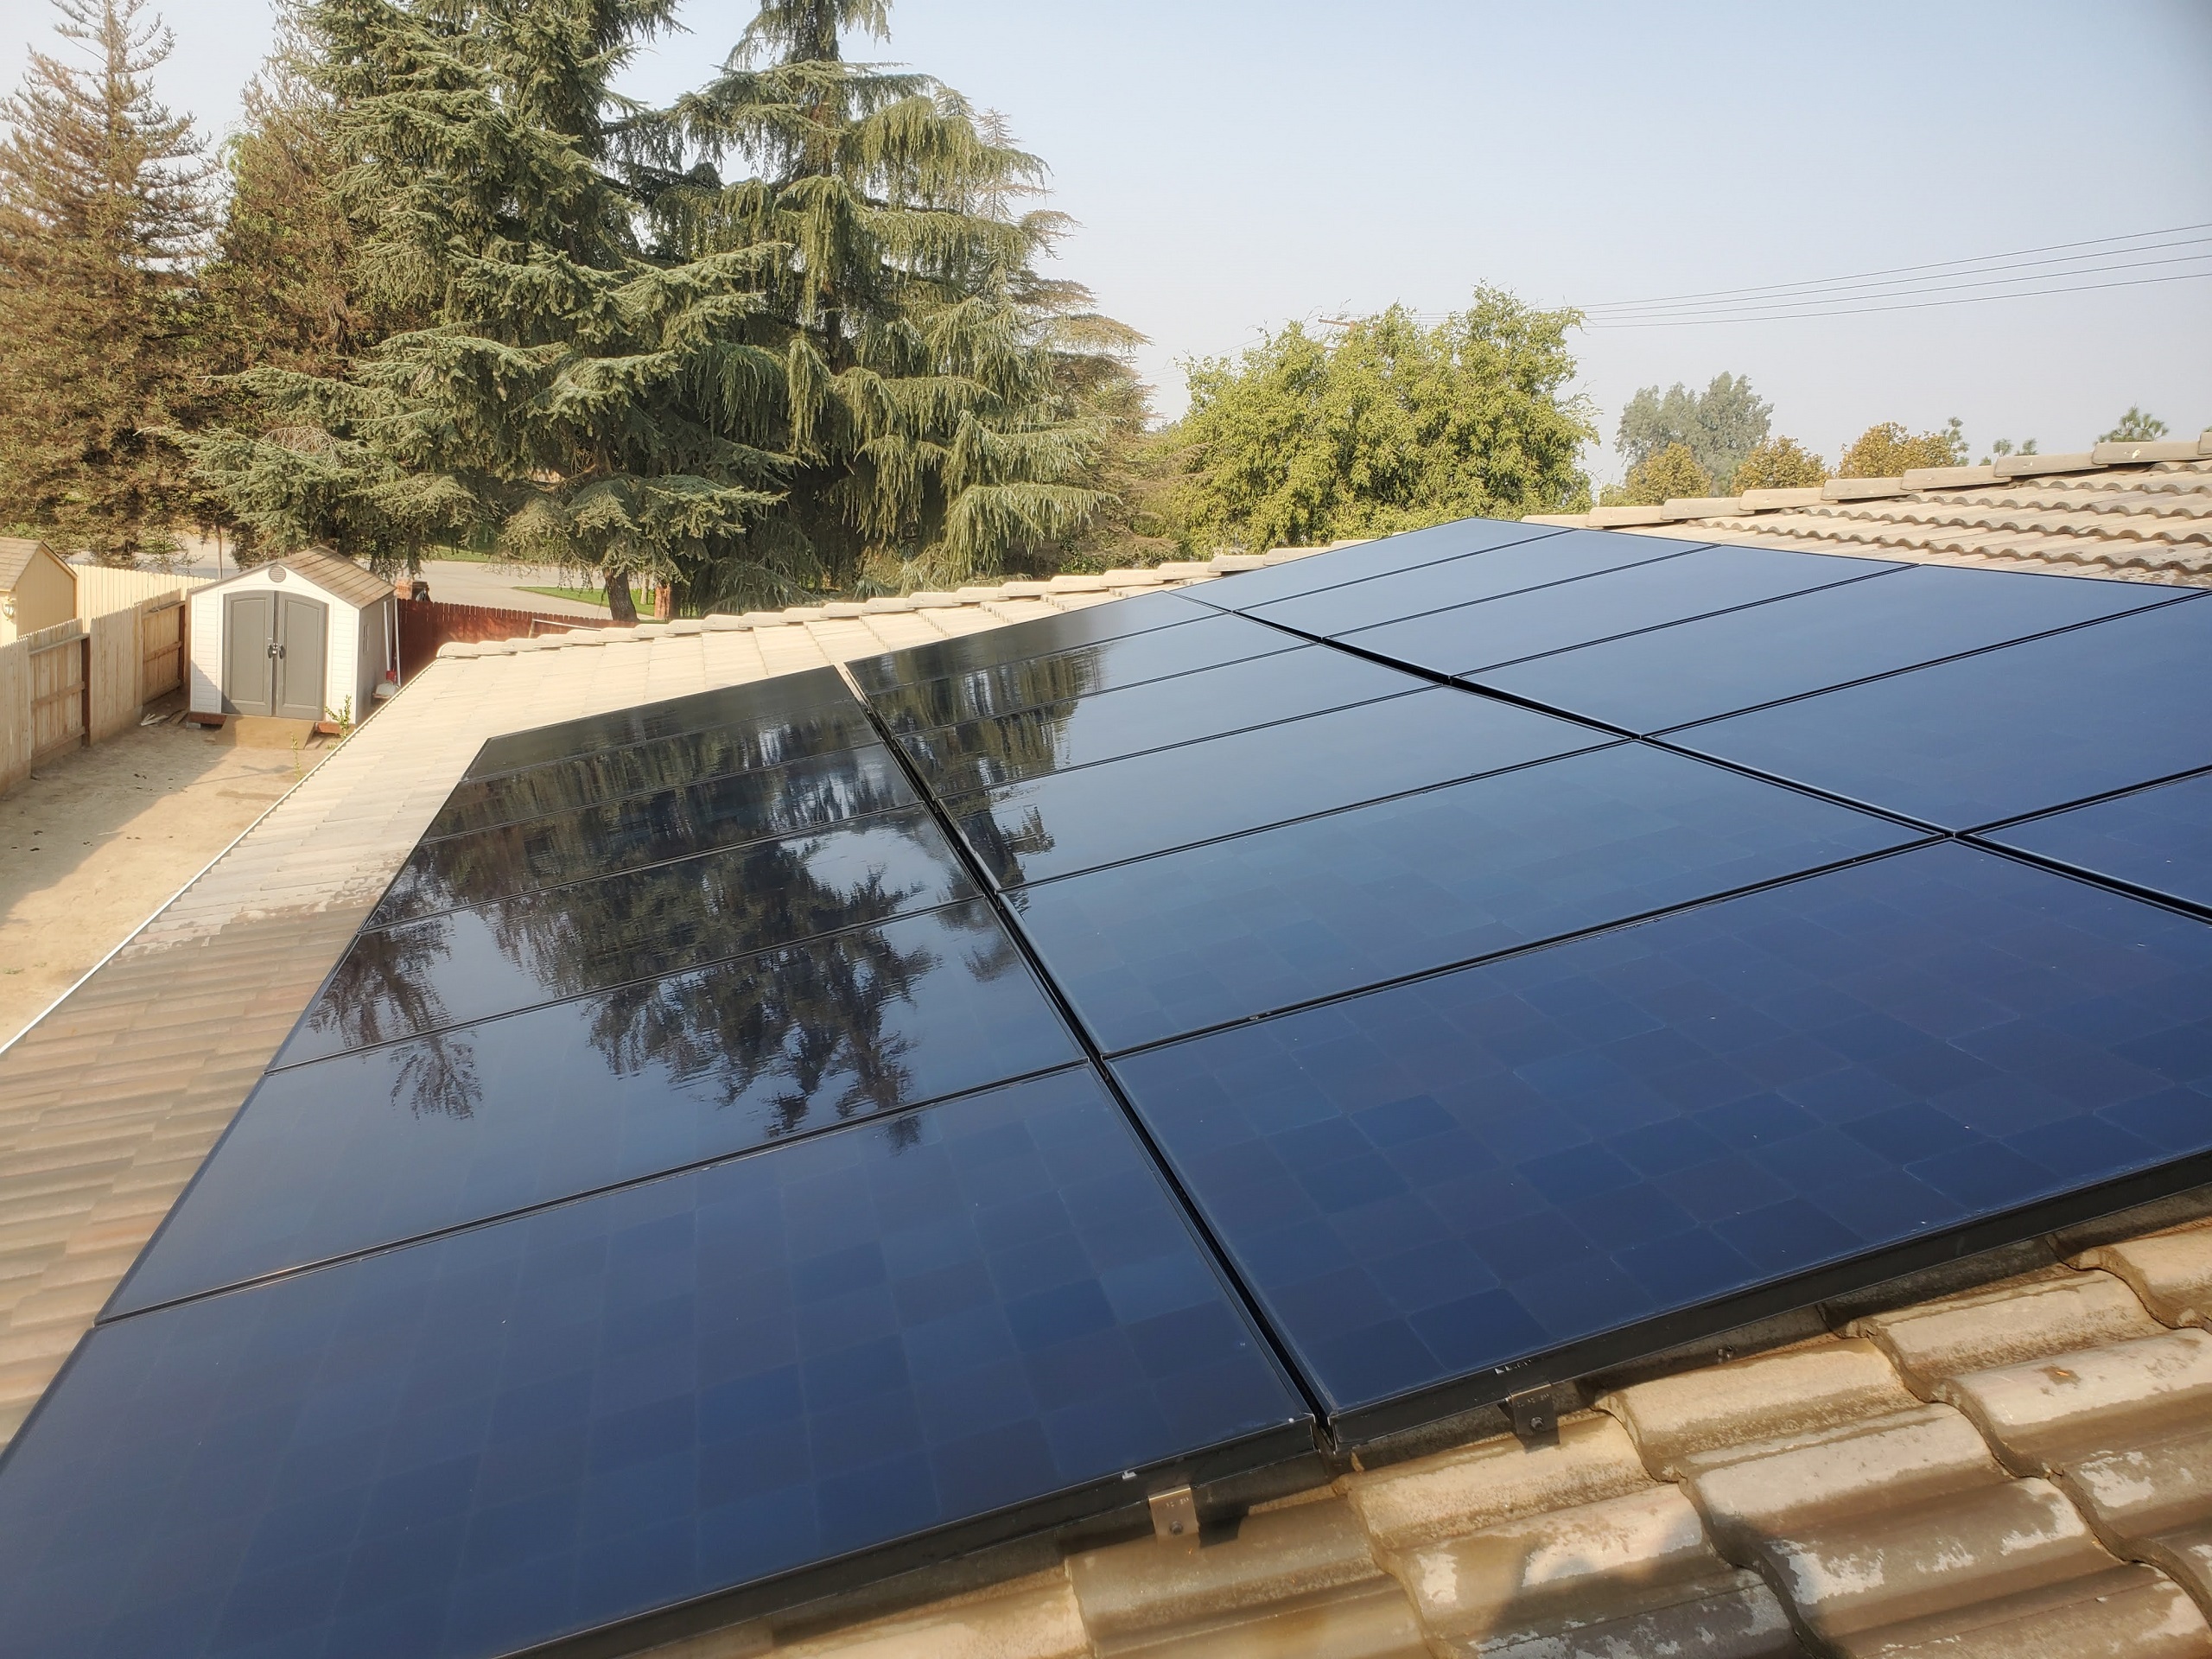 Clean SunPower solar panels